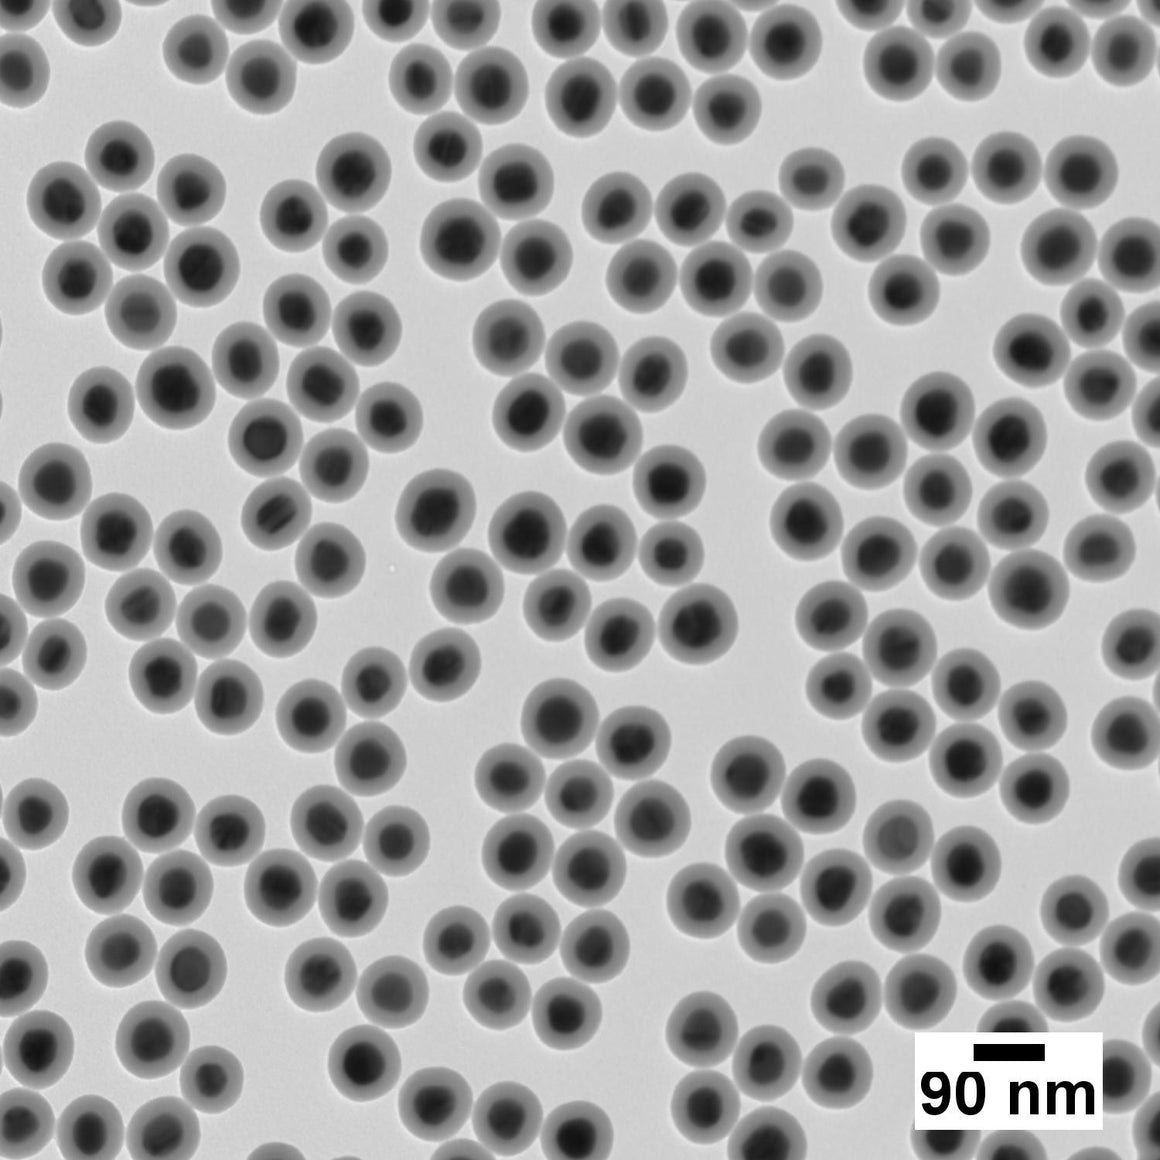 NanoXact Silver Nanospheres – Silica Shelled (Aminated)